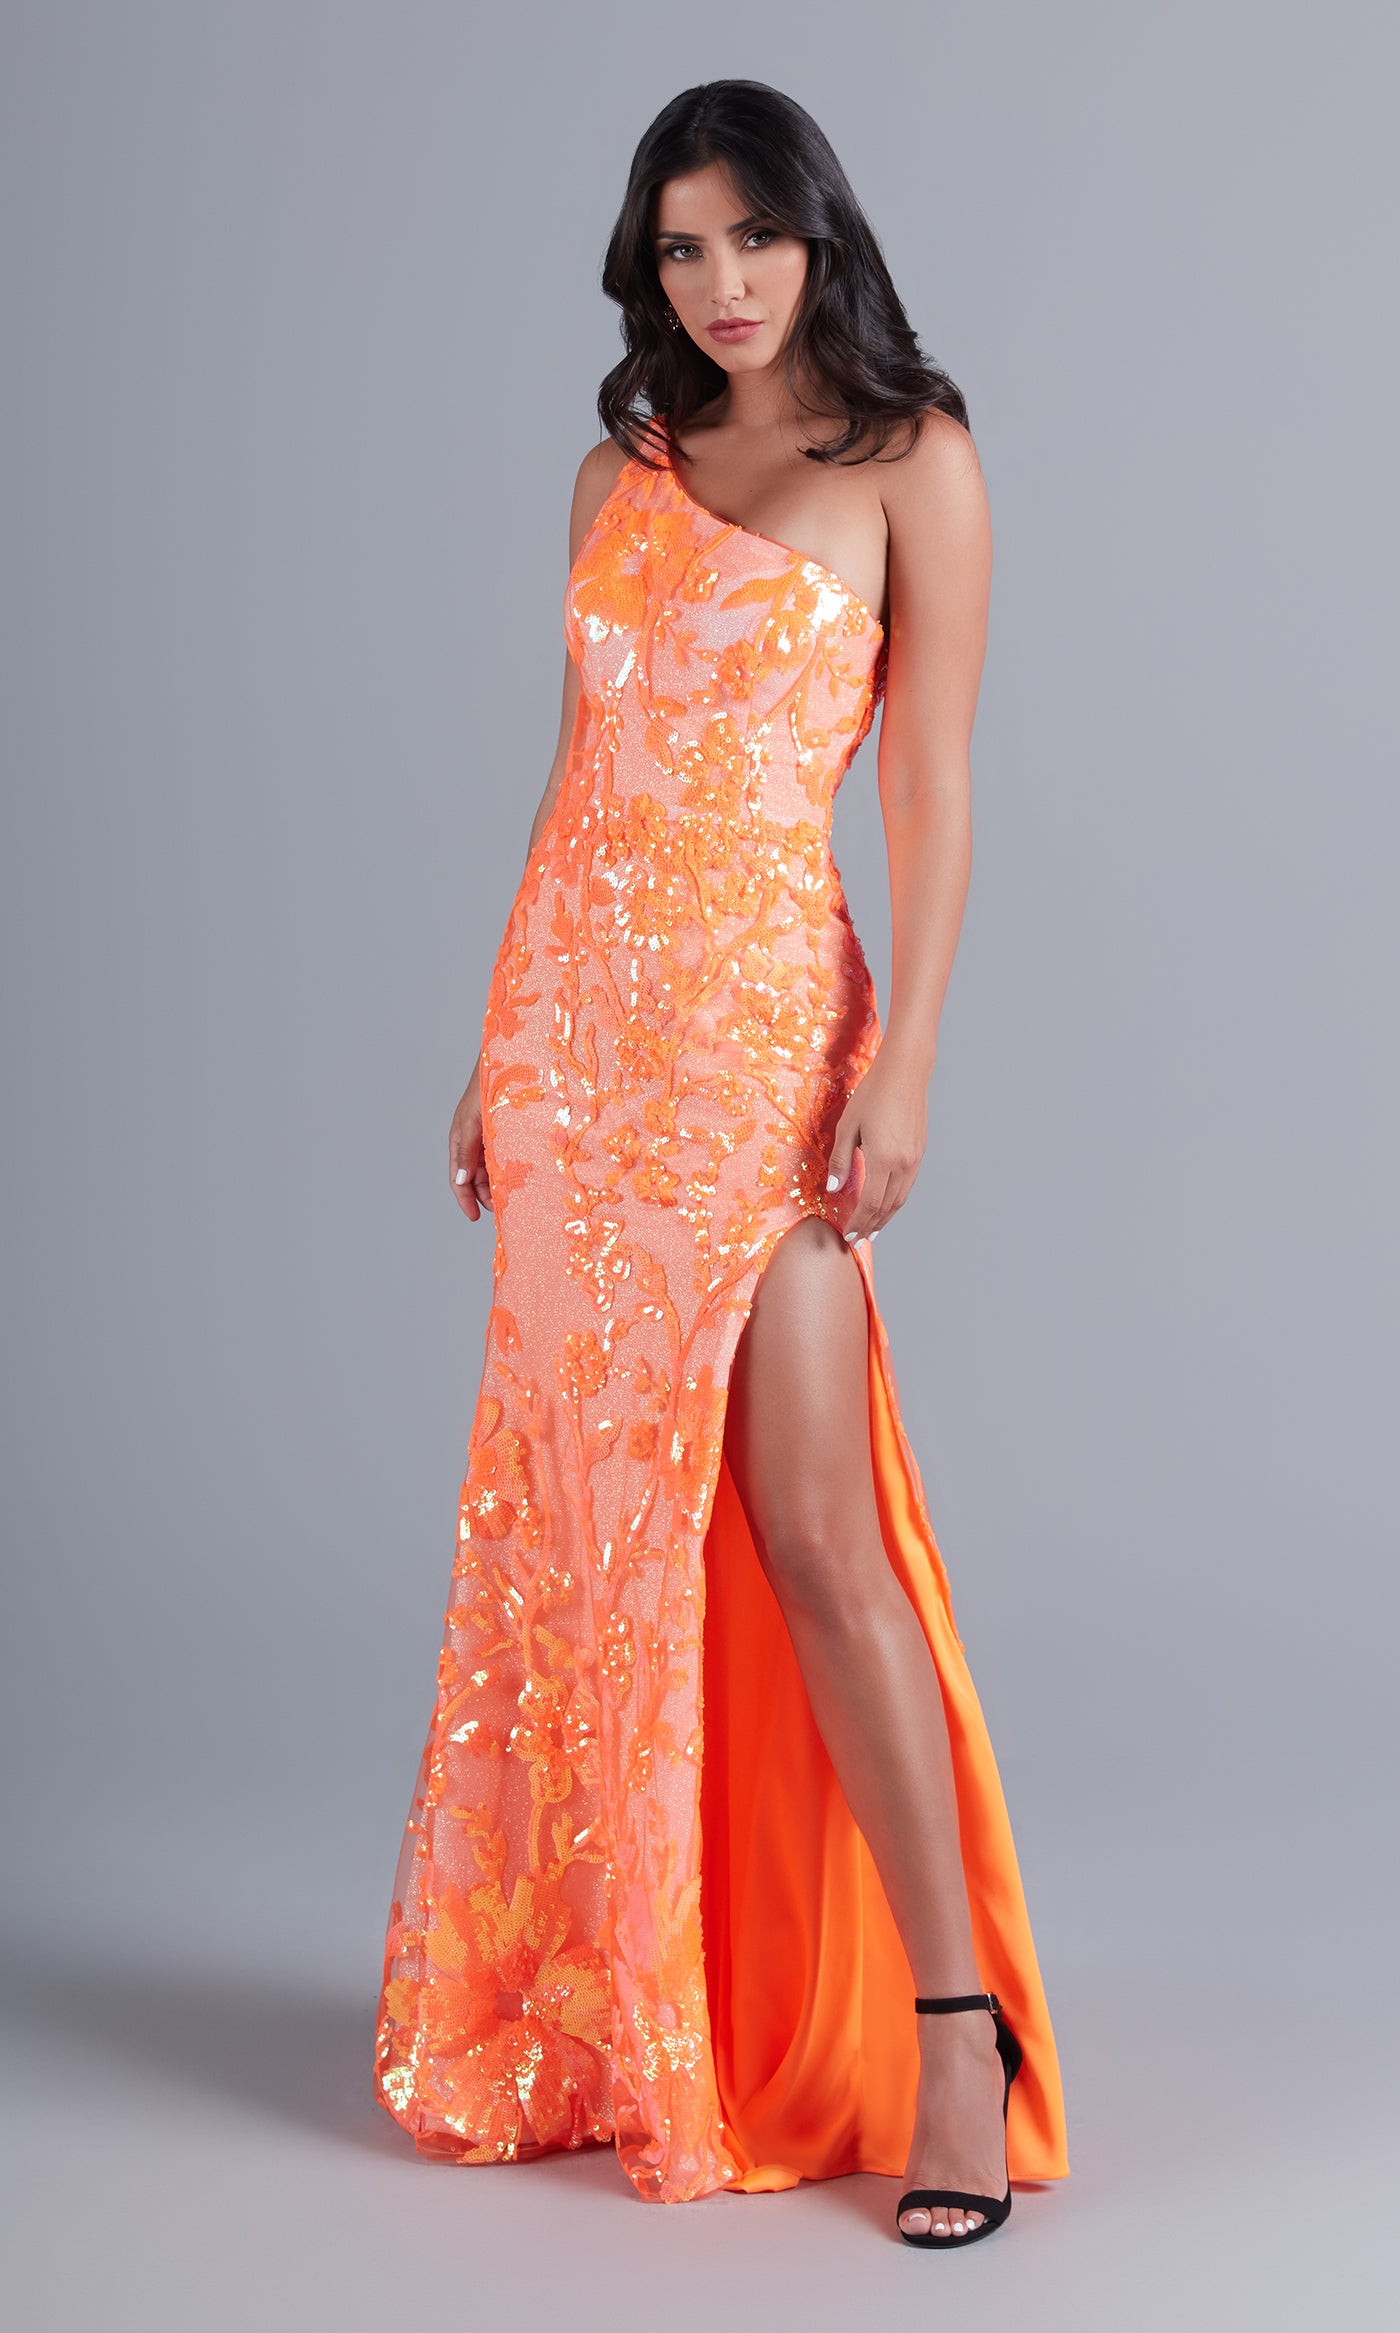 Neon Orange One-Shoulder-Sash Long Neon Designer Prom Dress